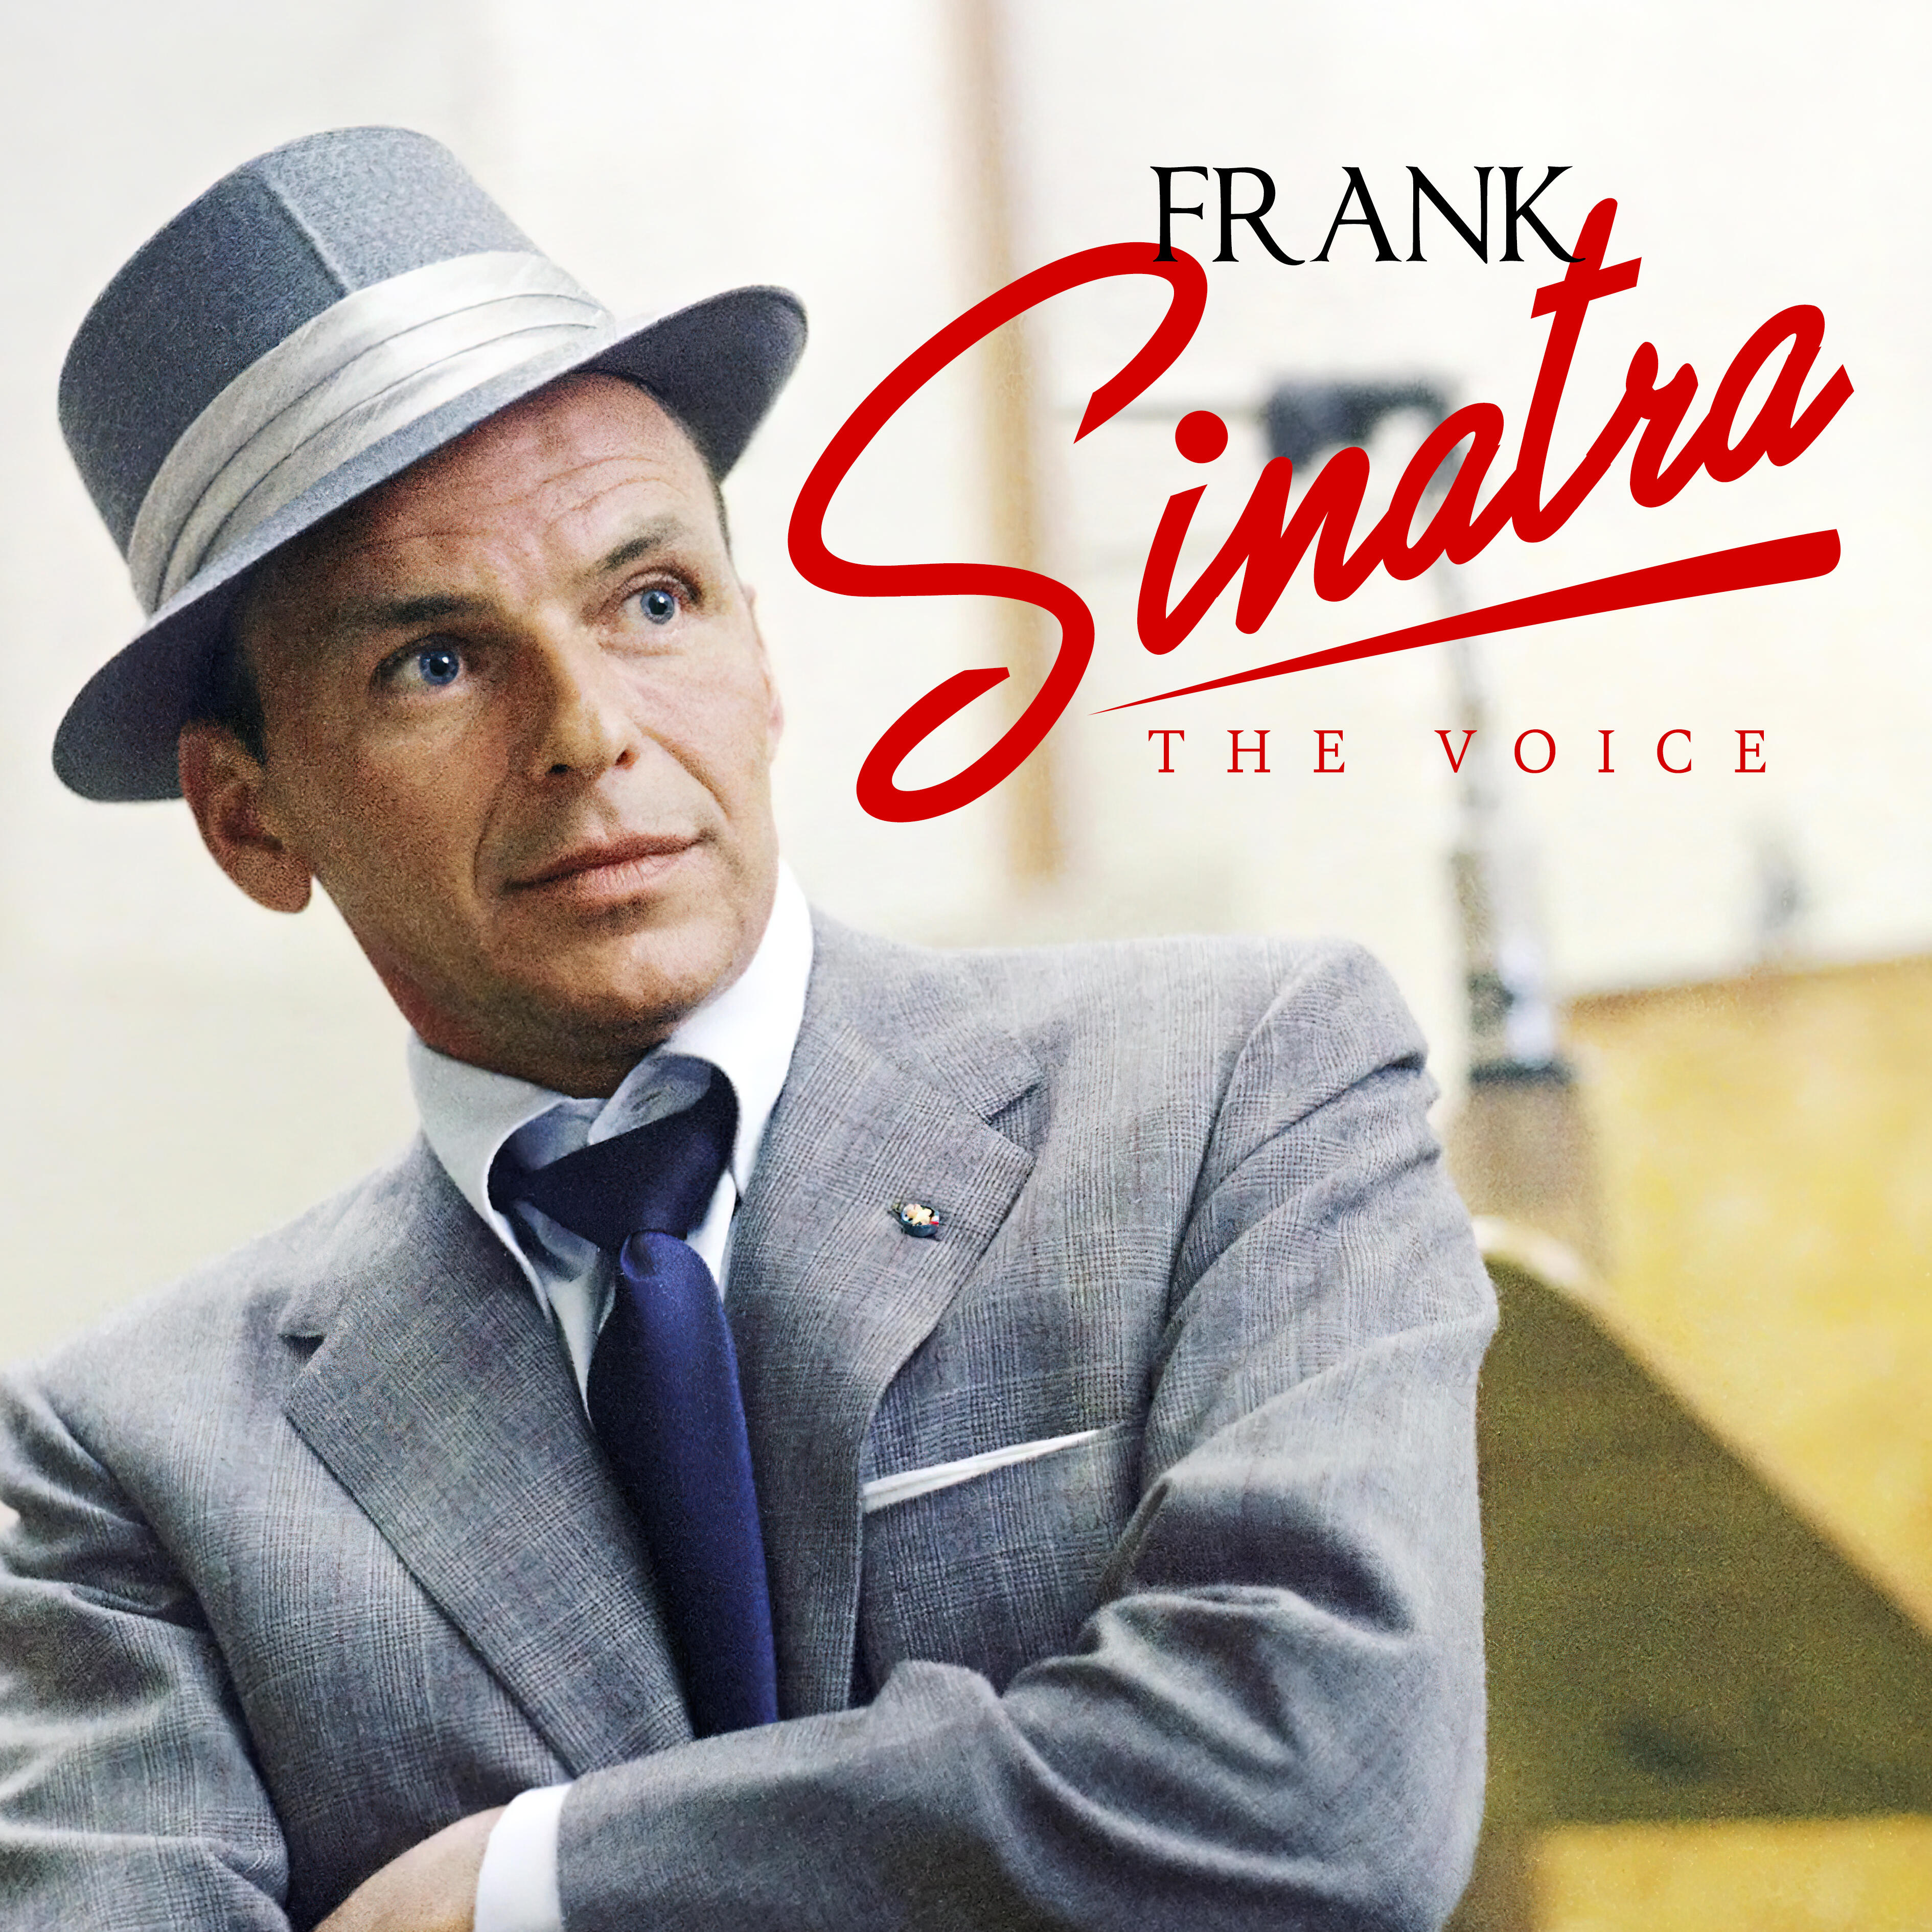 Frank Sinatra The Voice iHeart